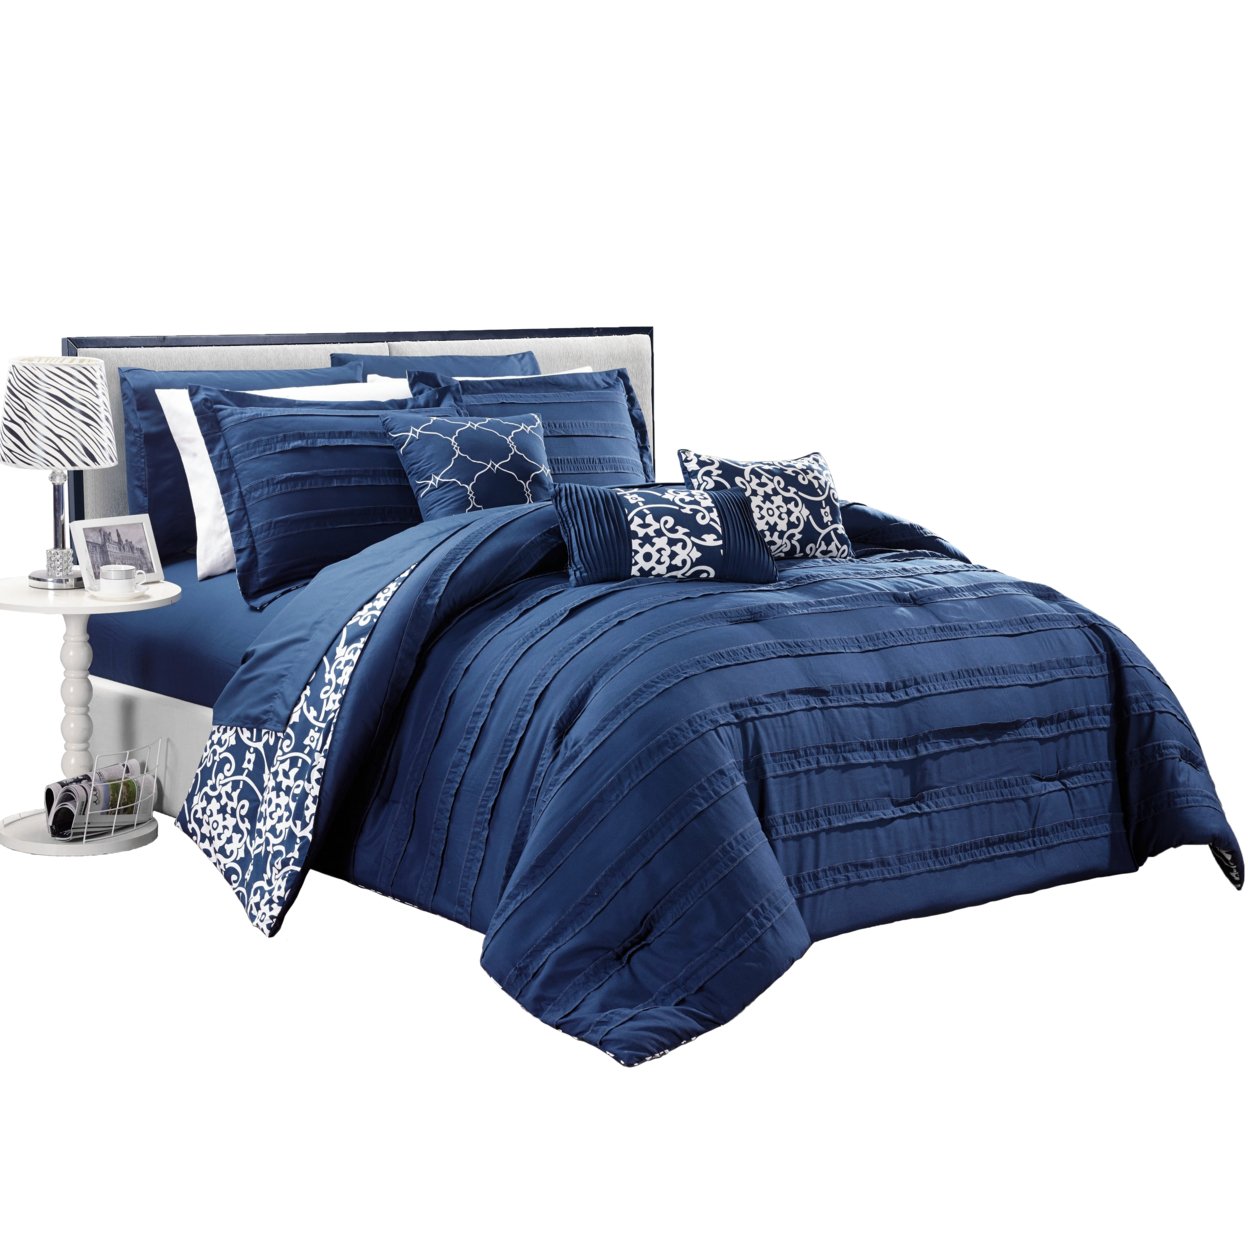 10-Piece Reversible Bed In A Bag Comforter & Sheet Set, Multiple Colors - Navy, Queen